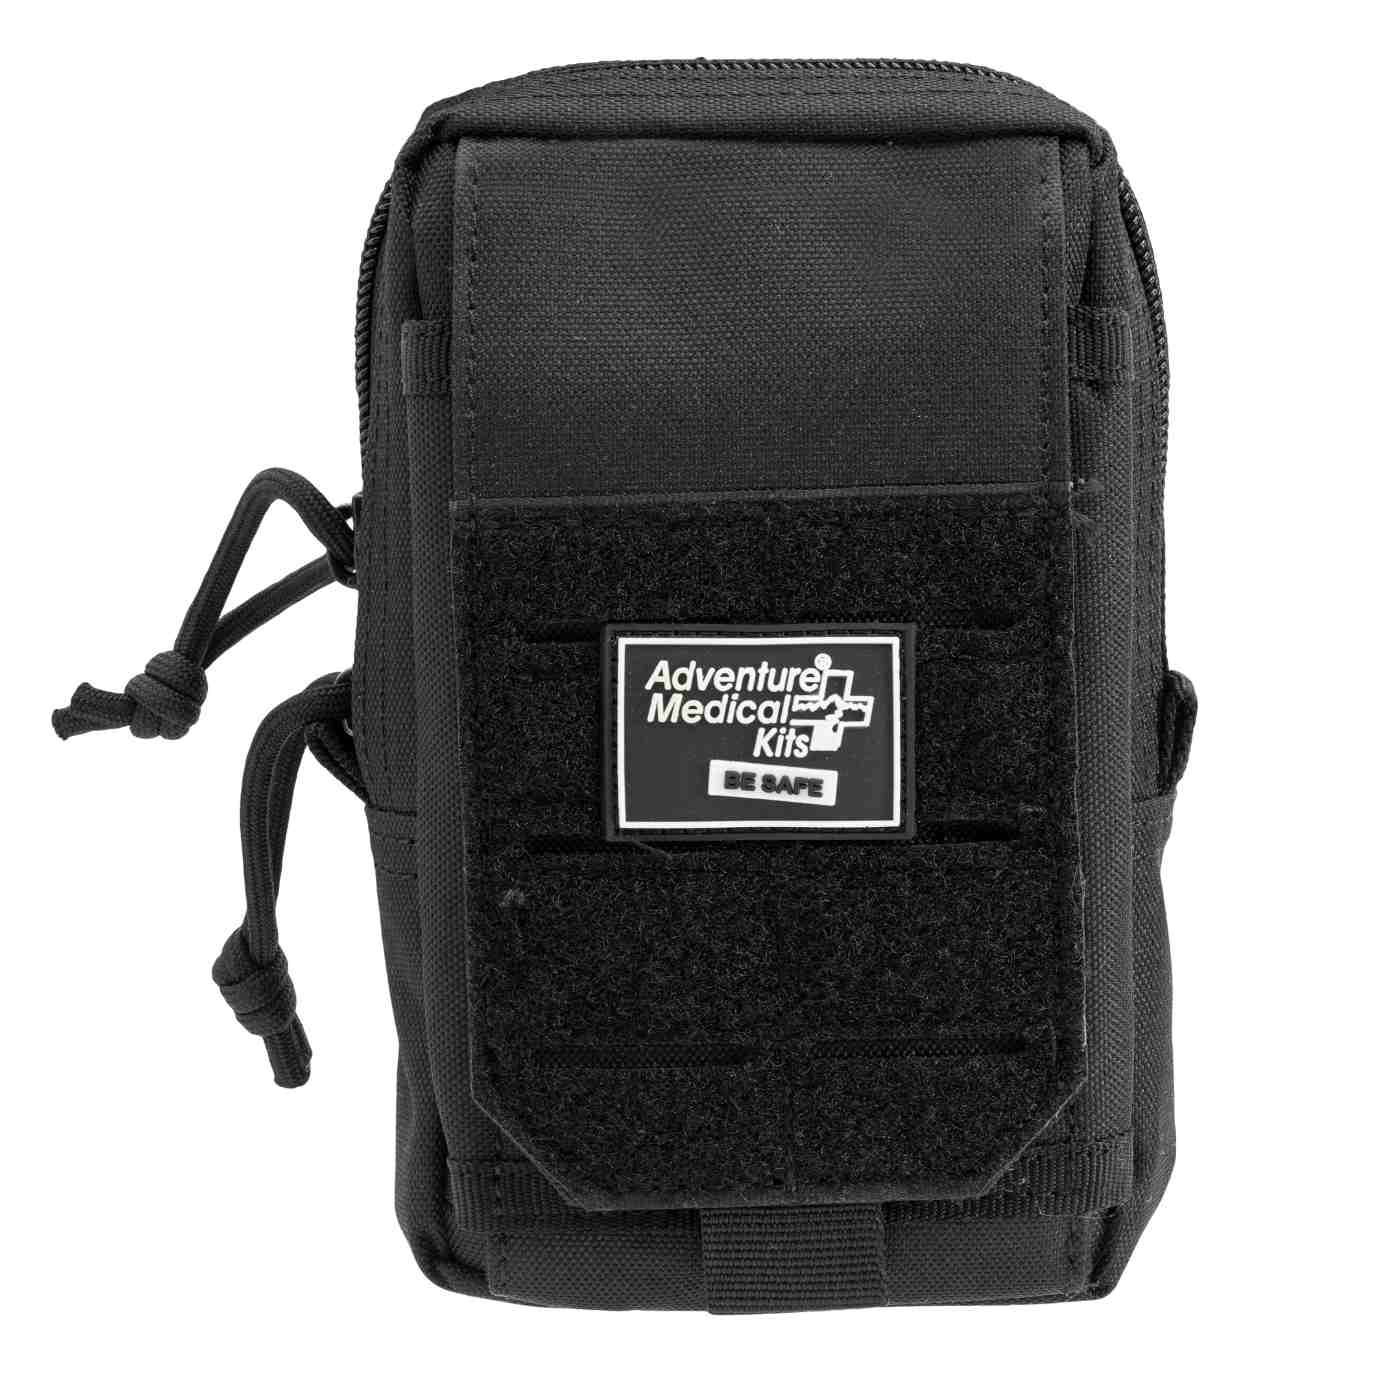 MOLLE Bag Trauma Kit 0.5 - Black front